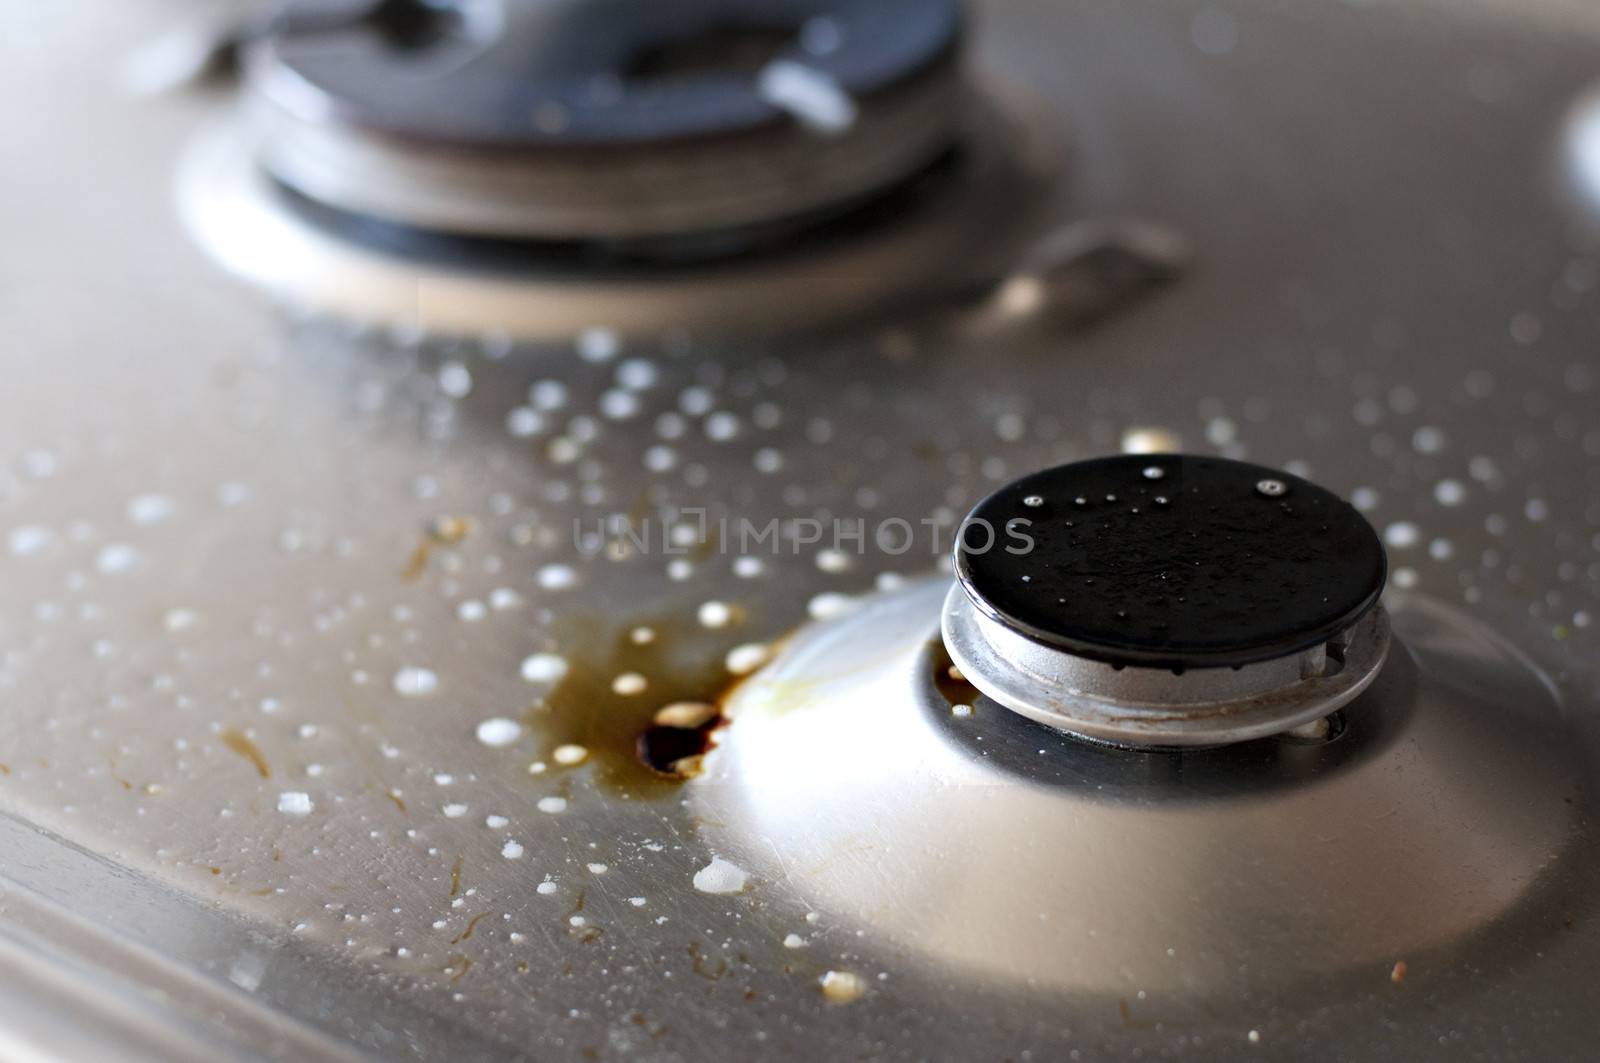 closeup image of a Dirty gas stove